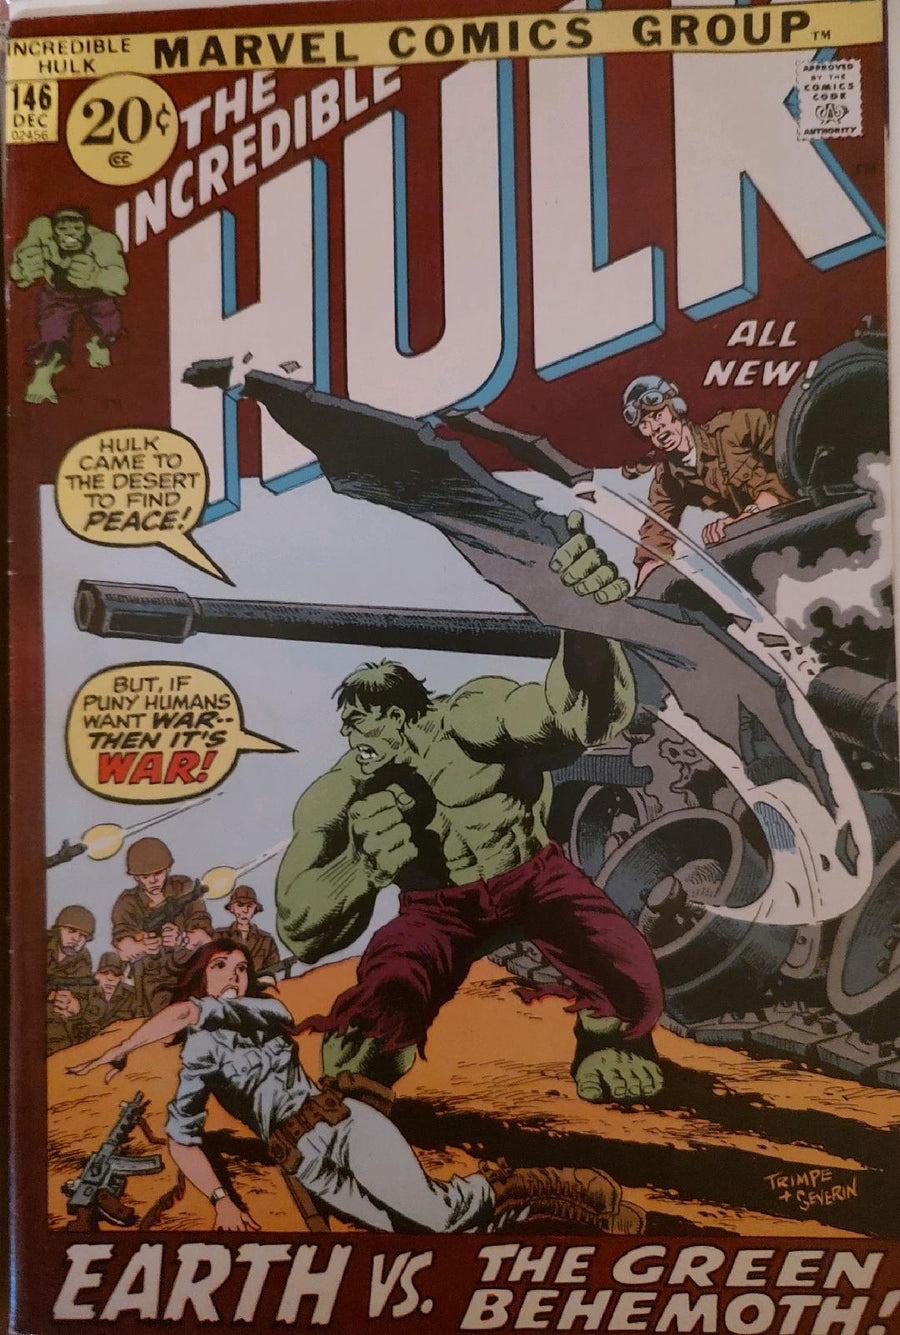 The Incredible Hulk #146 Comic Book Cover